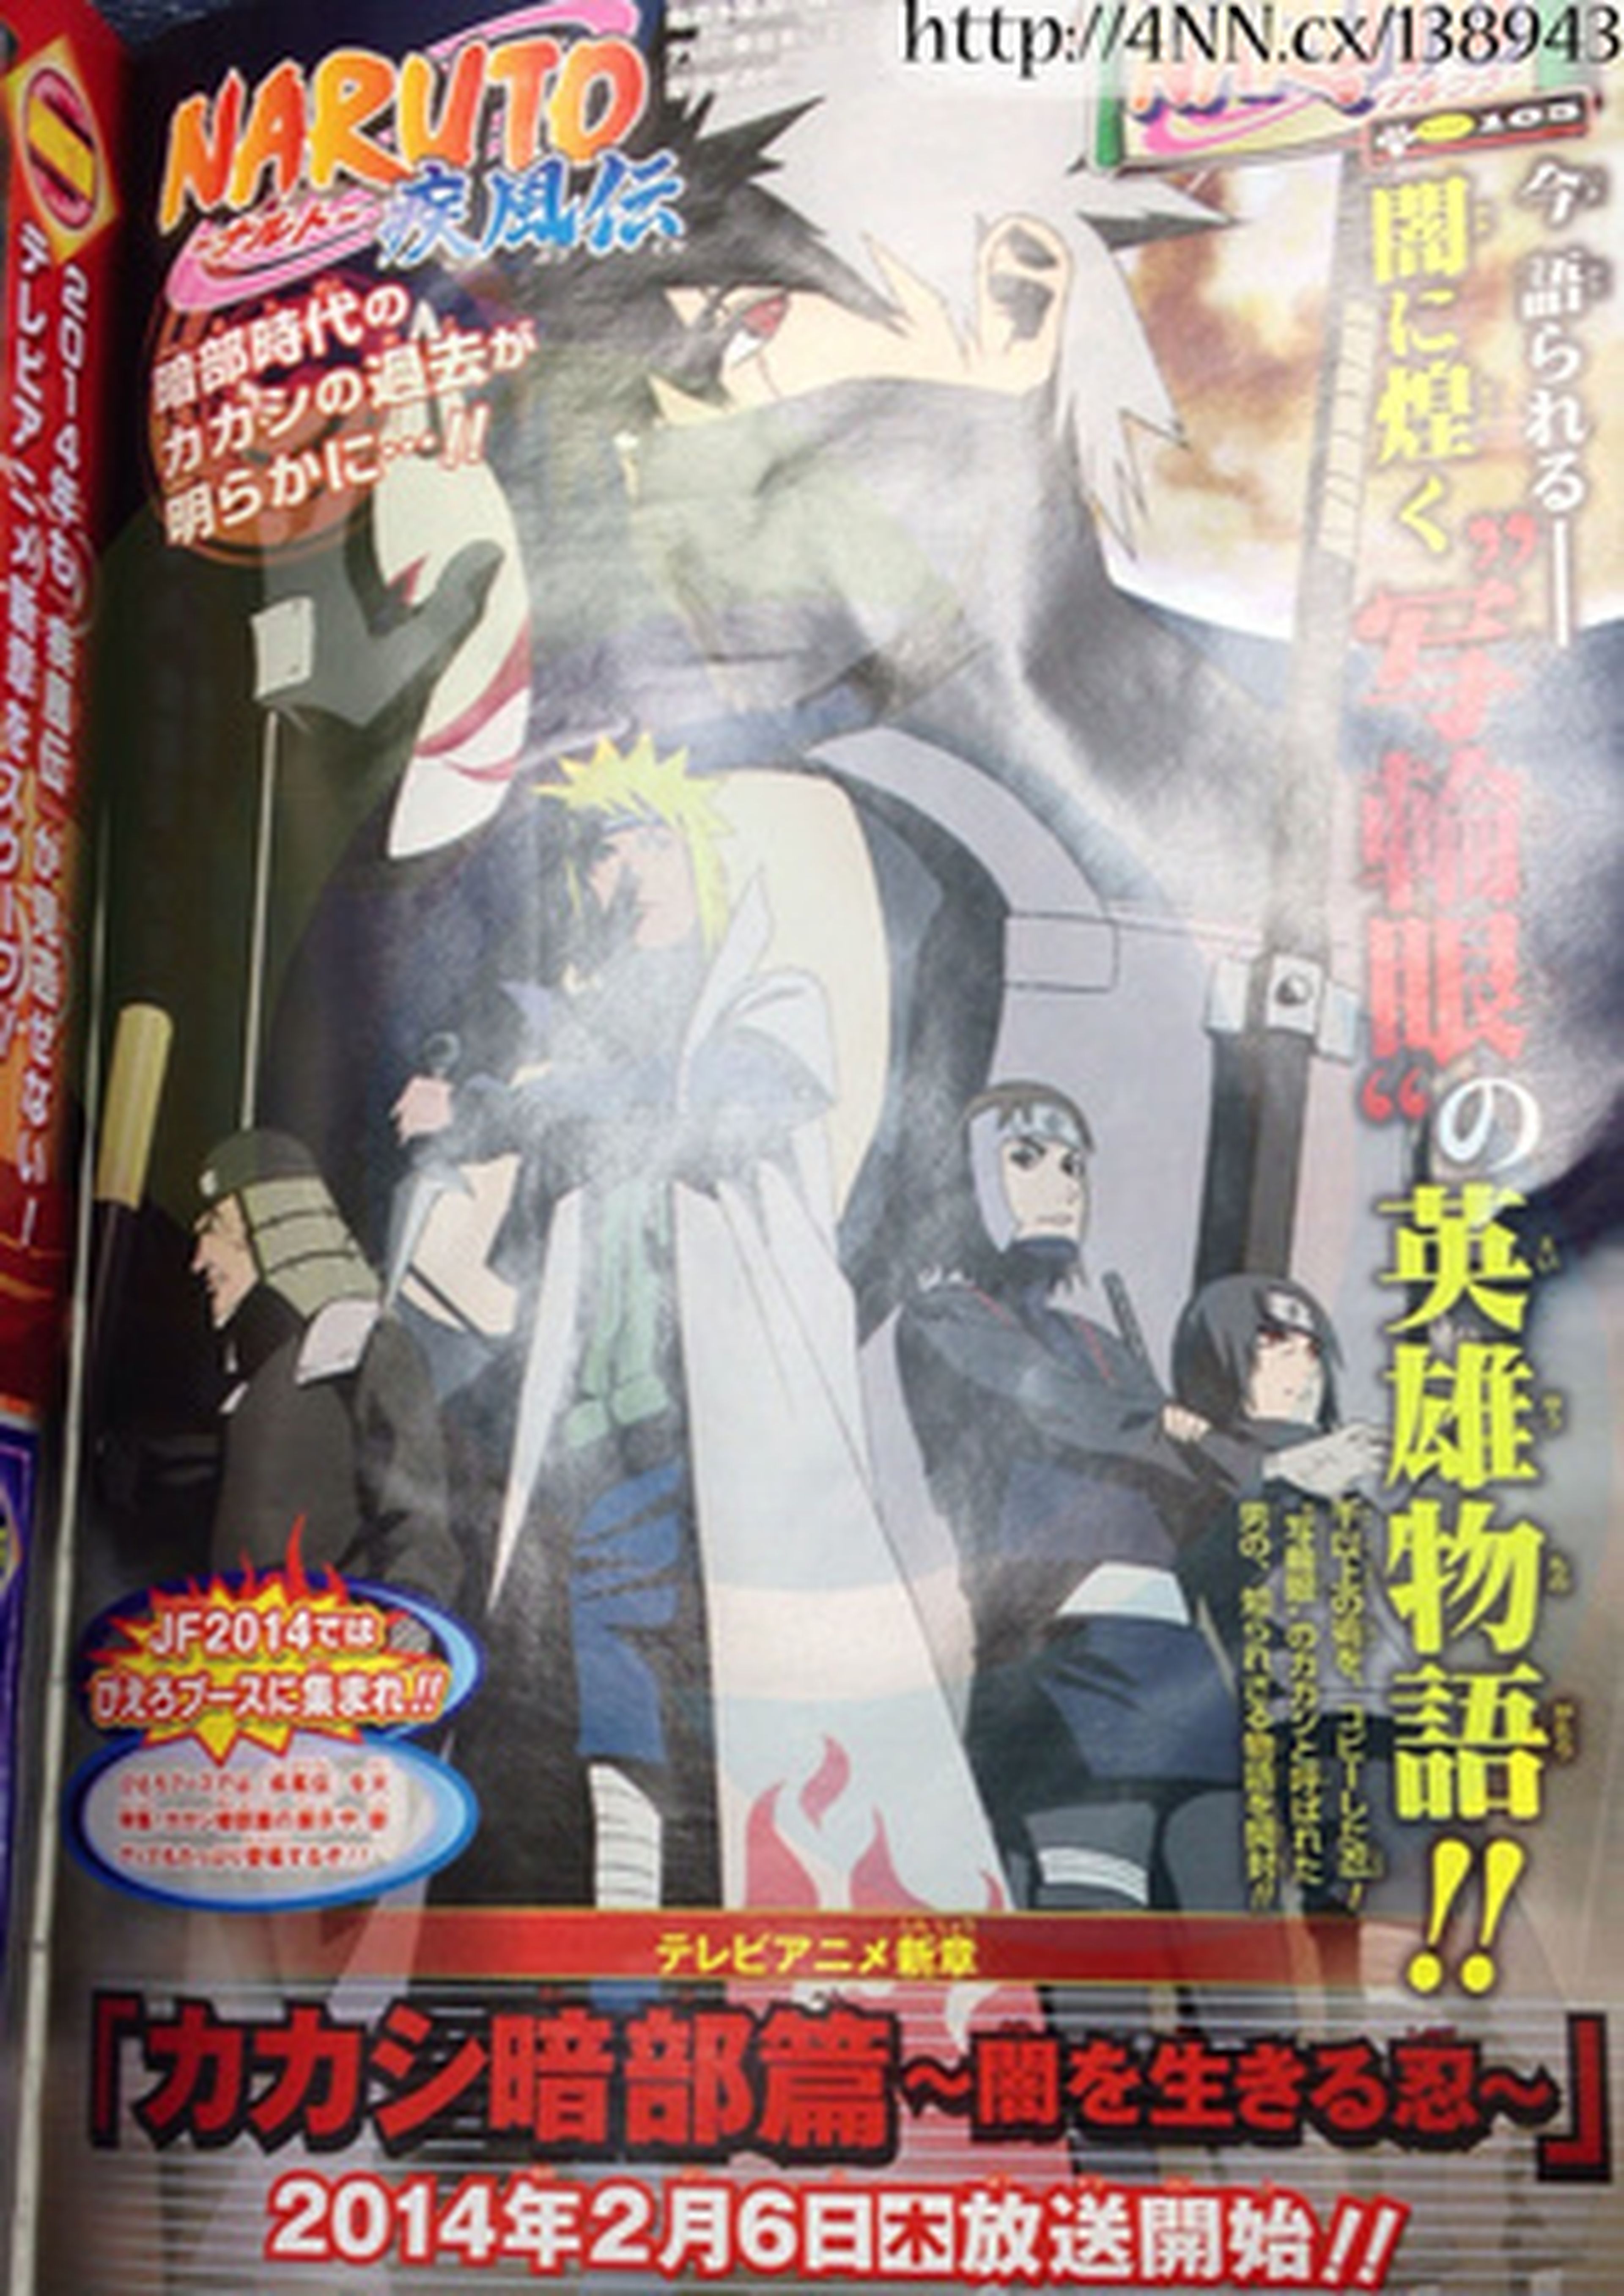 Nuevo especial de Naruto, protagonizado por Kakashi